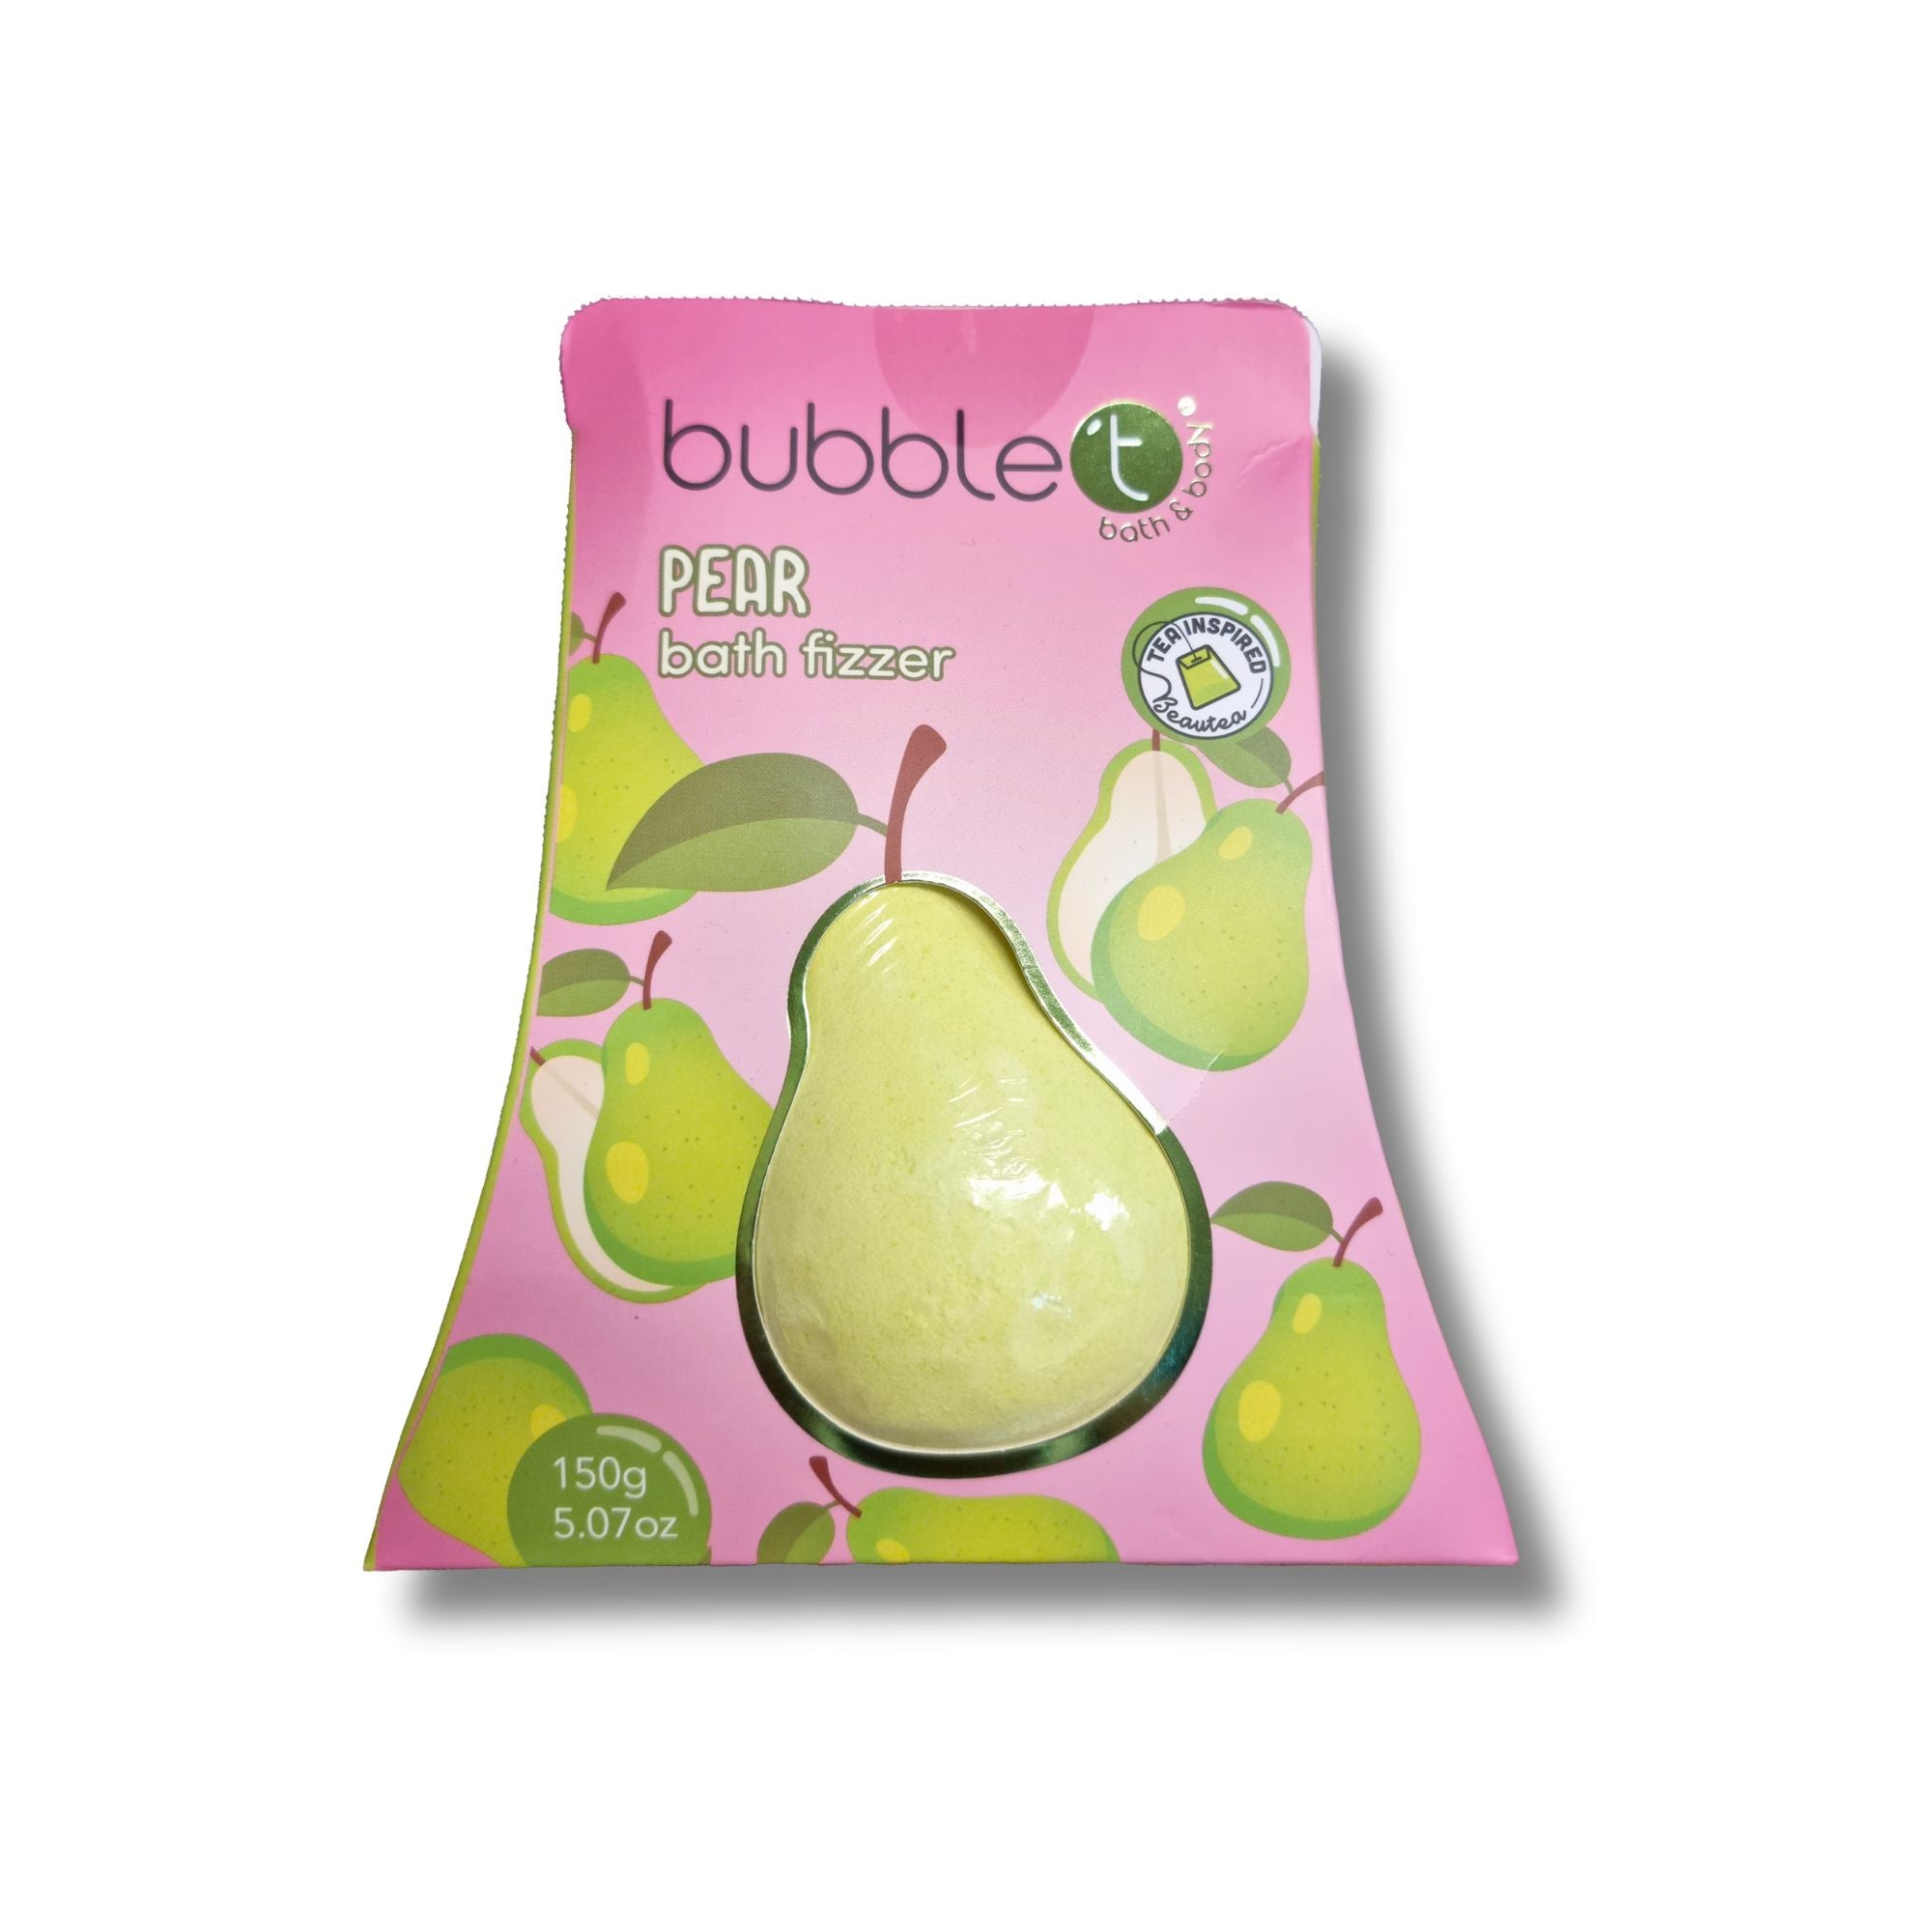 Bubble T Pear Bath Fizzer